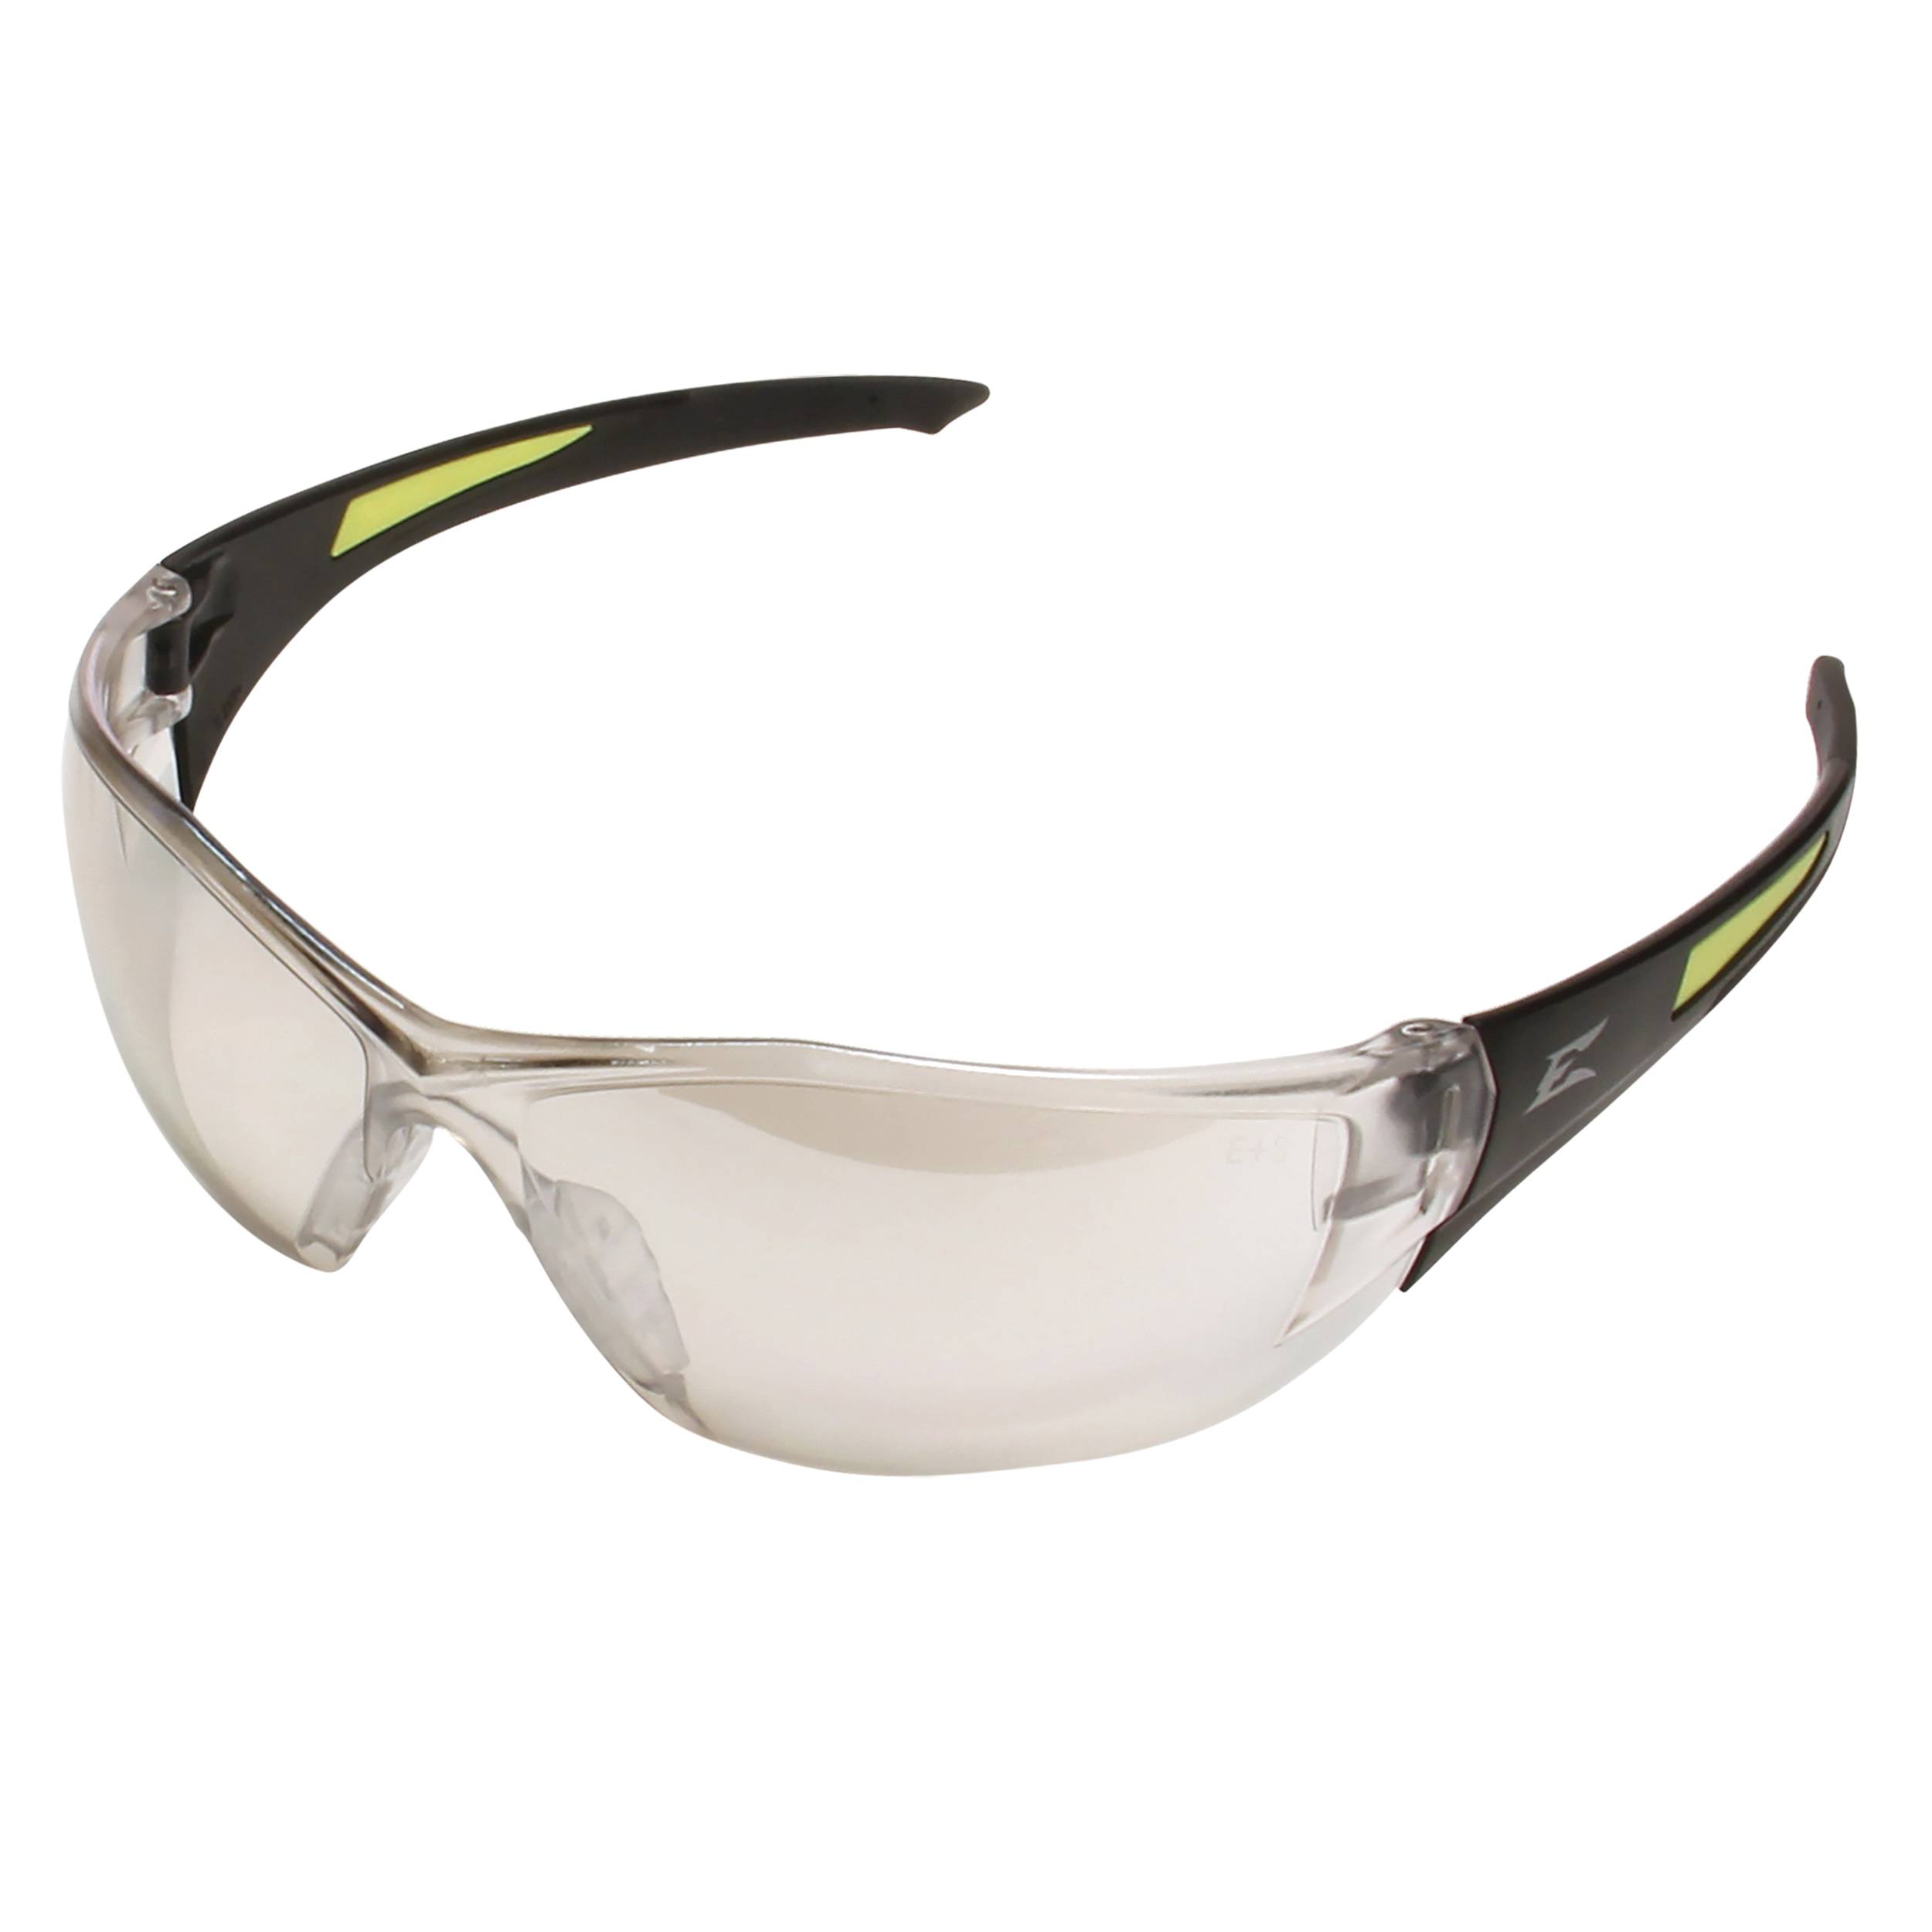 EDGE® SD111AR-G2 Delano G2 Unisex Safety Glasses, Anti-Reflective/Anti-Scratch, Gray Lens, Frameless/Wraparound Frame, Black, Nylon Frame, Polycarbonate Lens, ANSI/ISEA Z87.1+2015, MCEPS GL-PD 10-12